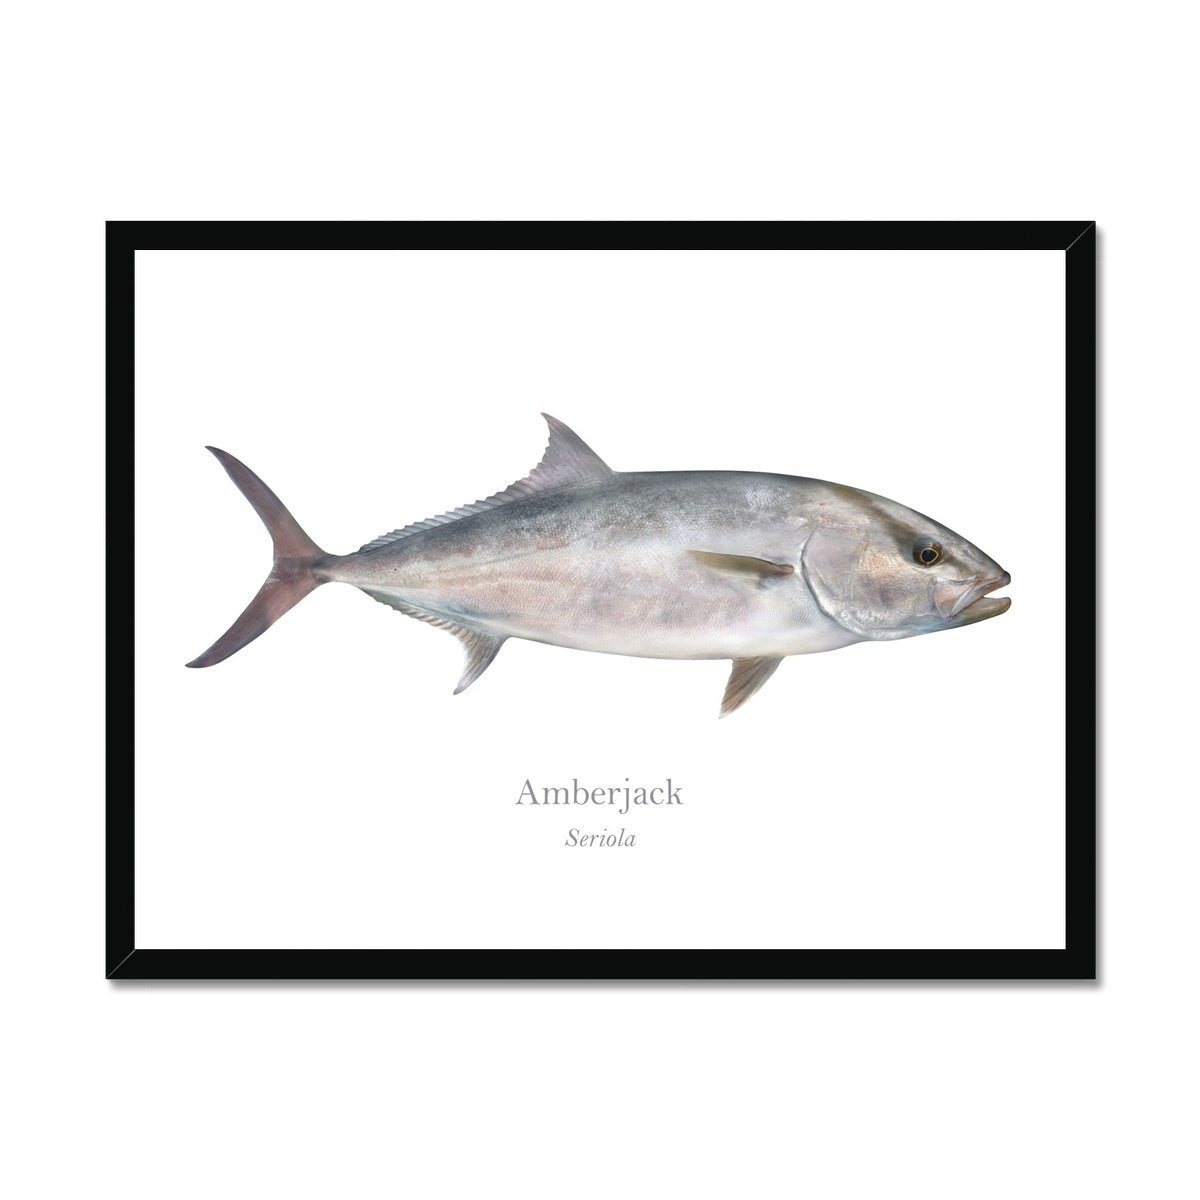 Amberjack - Framed Print - With Scientific Name - madfishlab.com